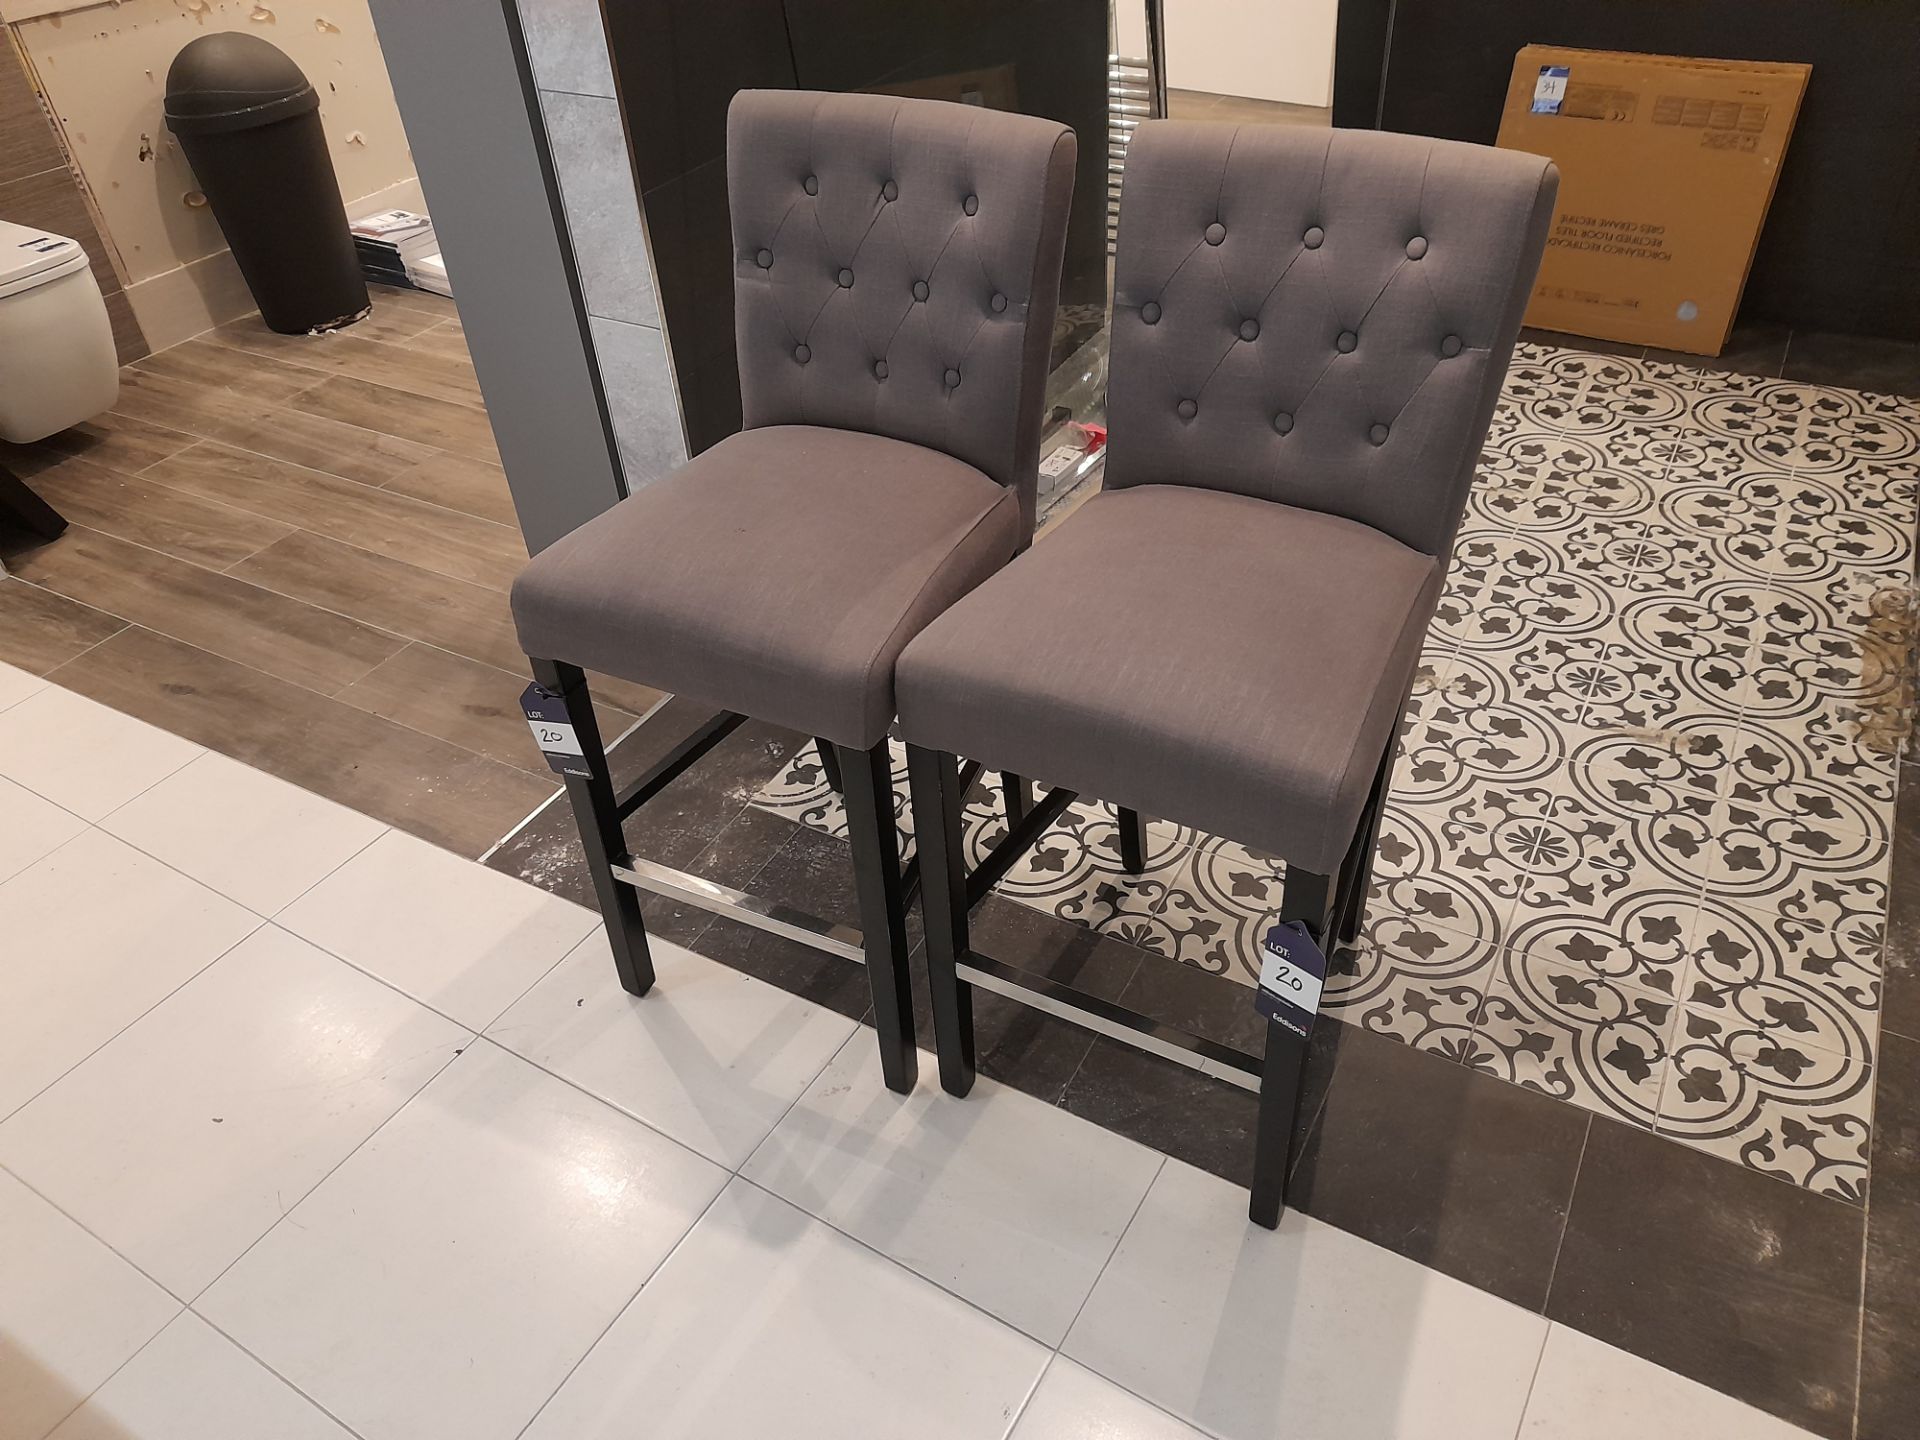 2 x Fabric upholstered bar stools